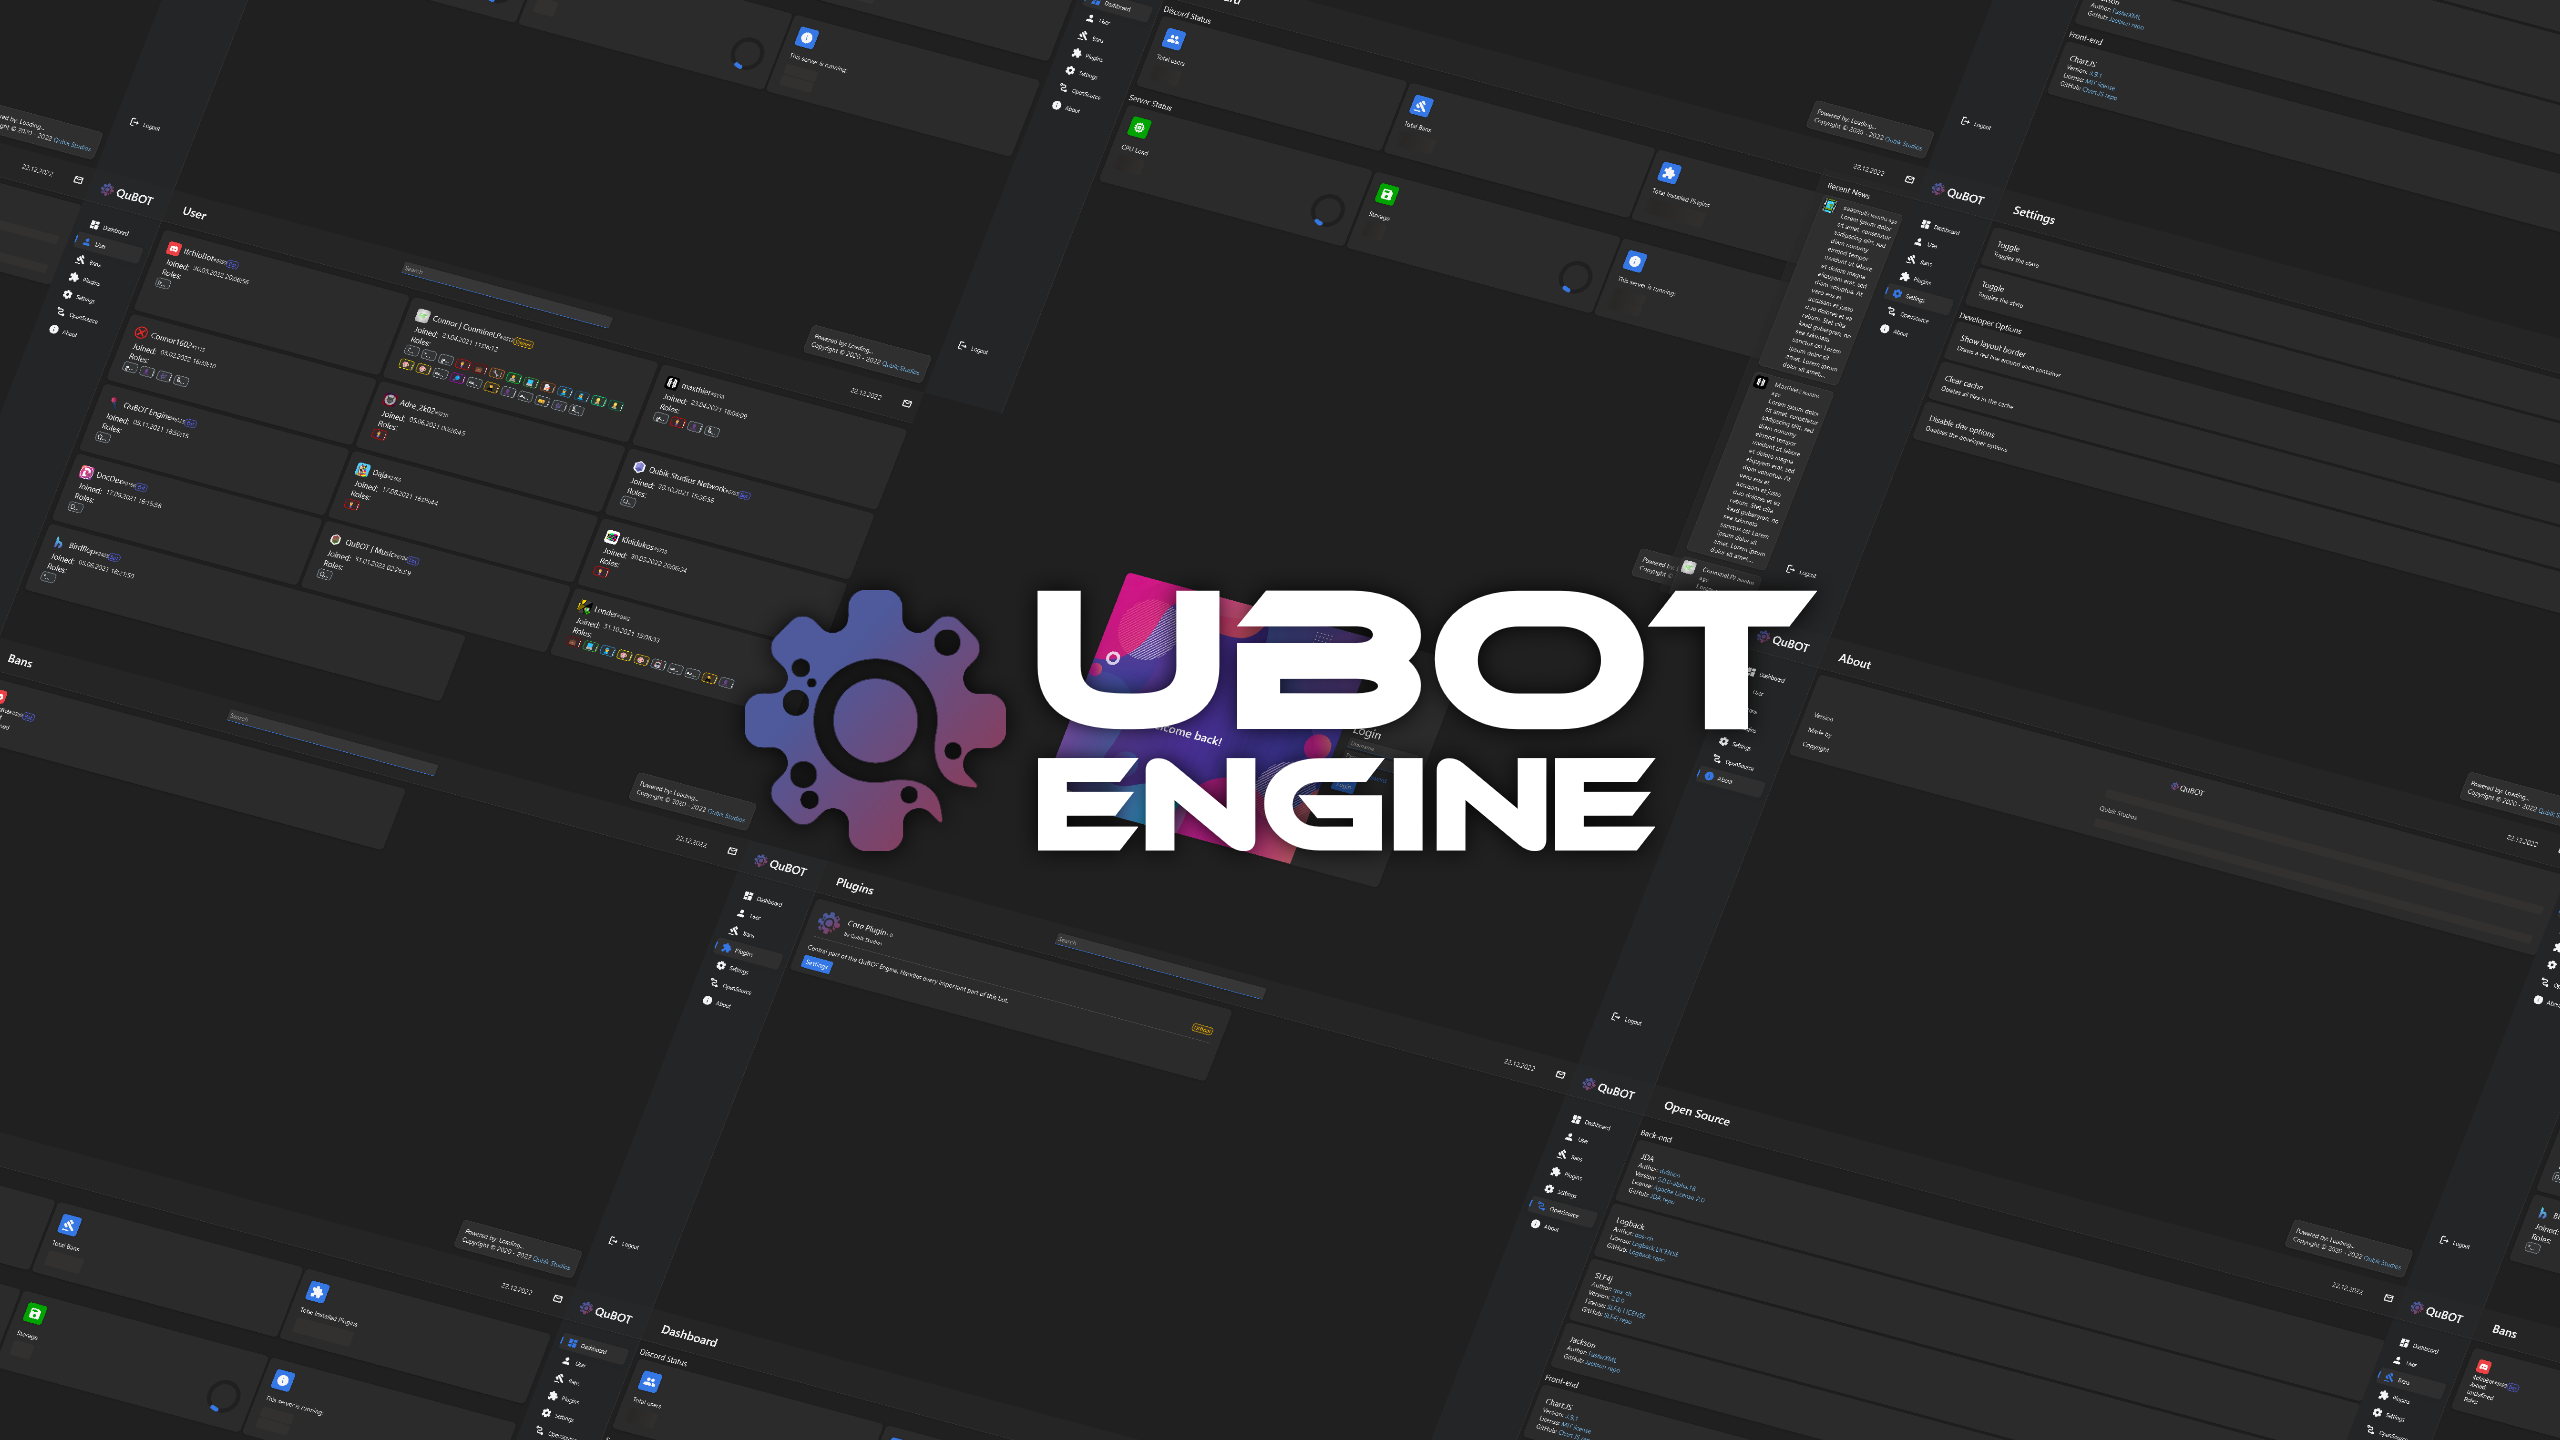 QuBOT Engine Wallpaper